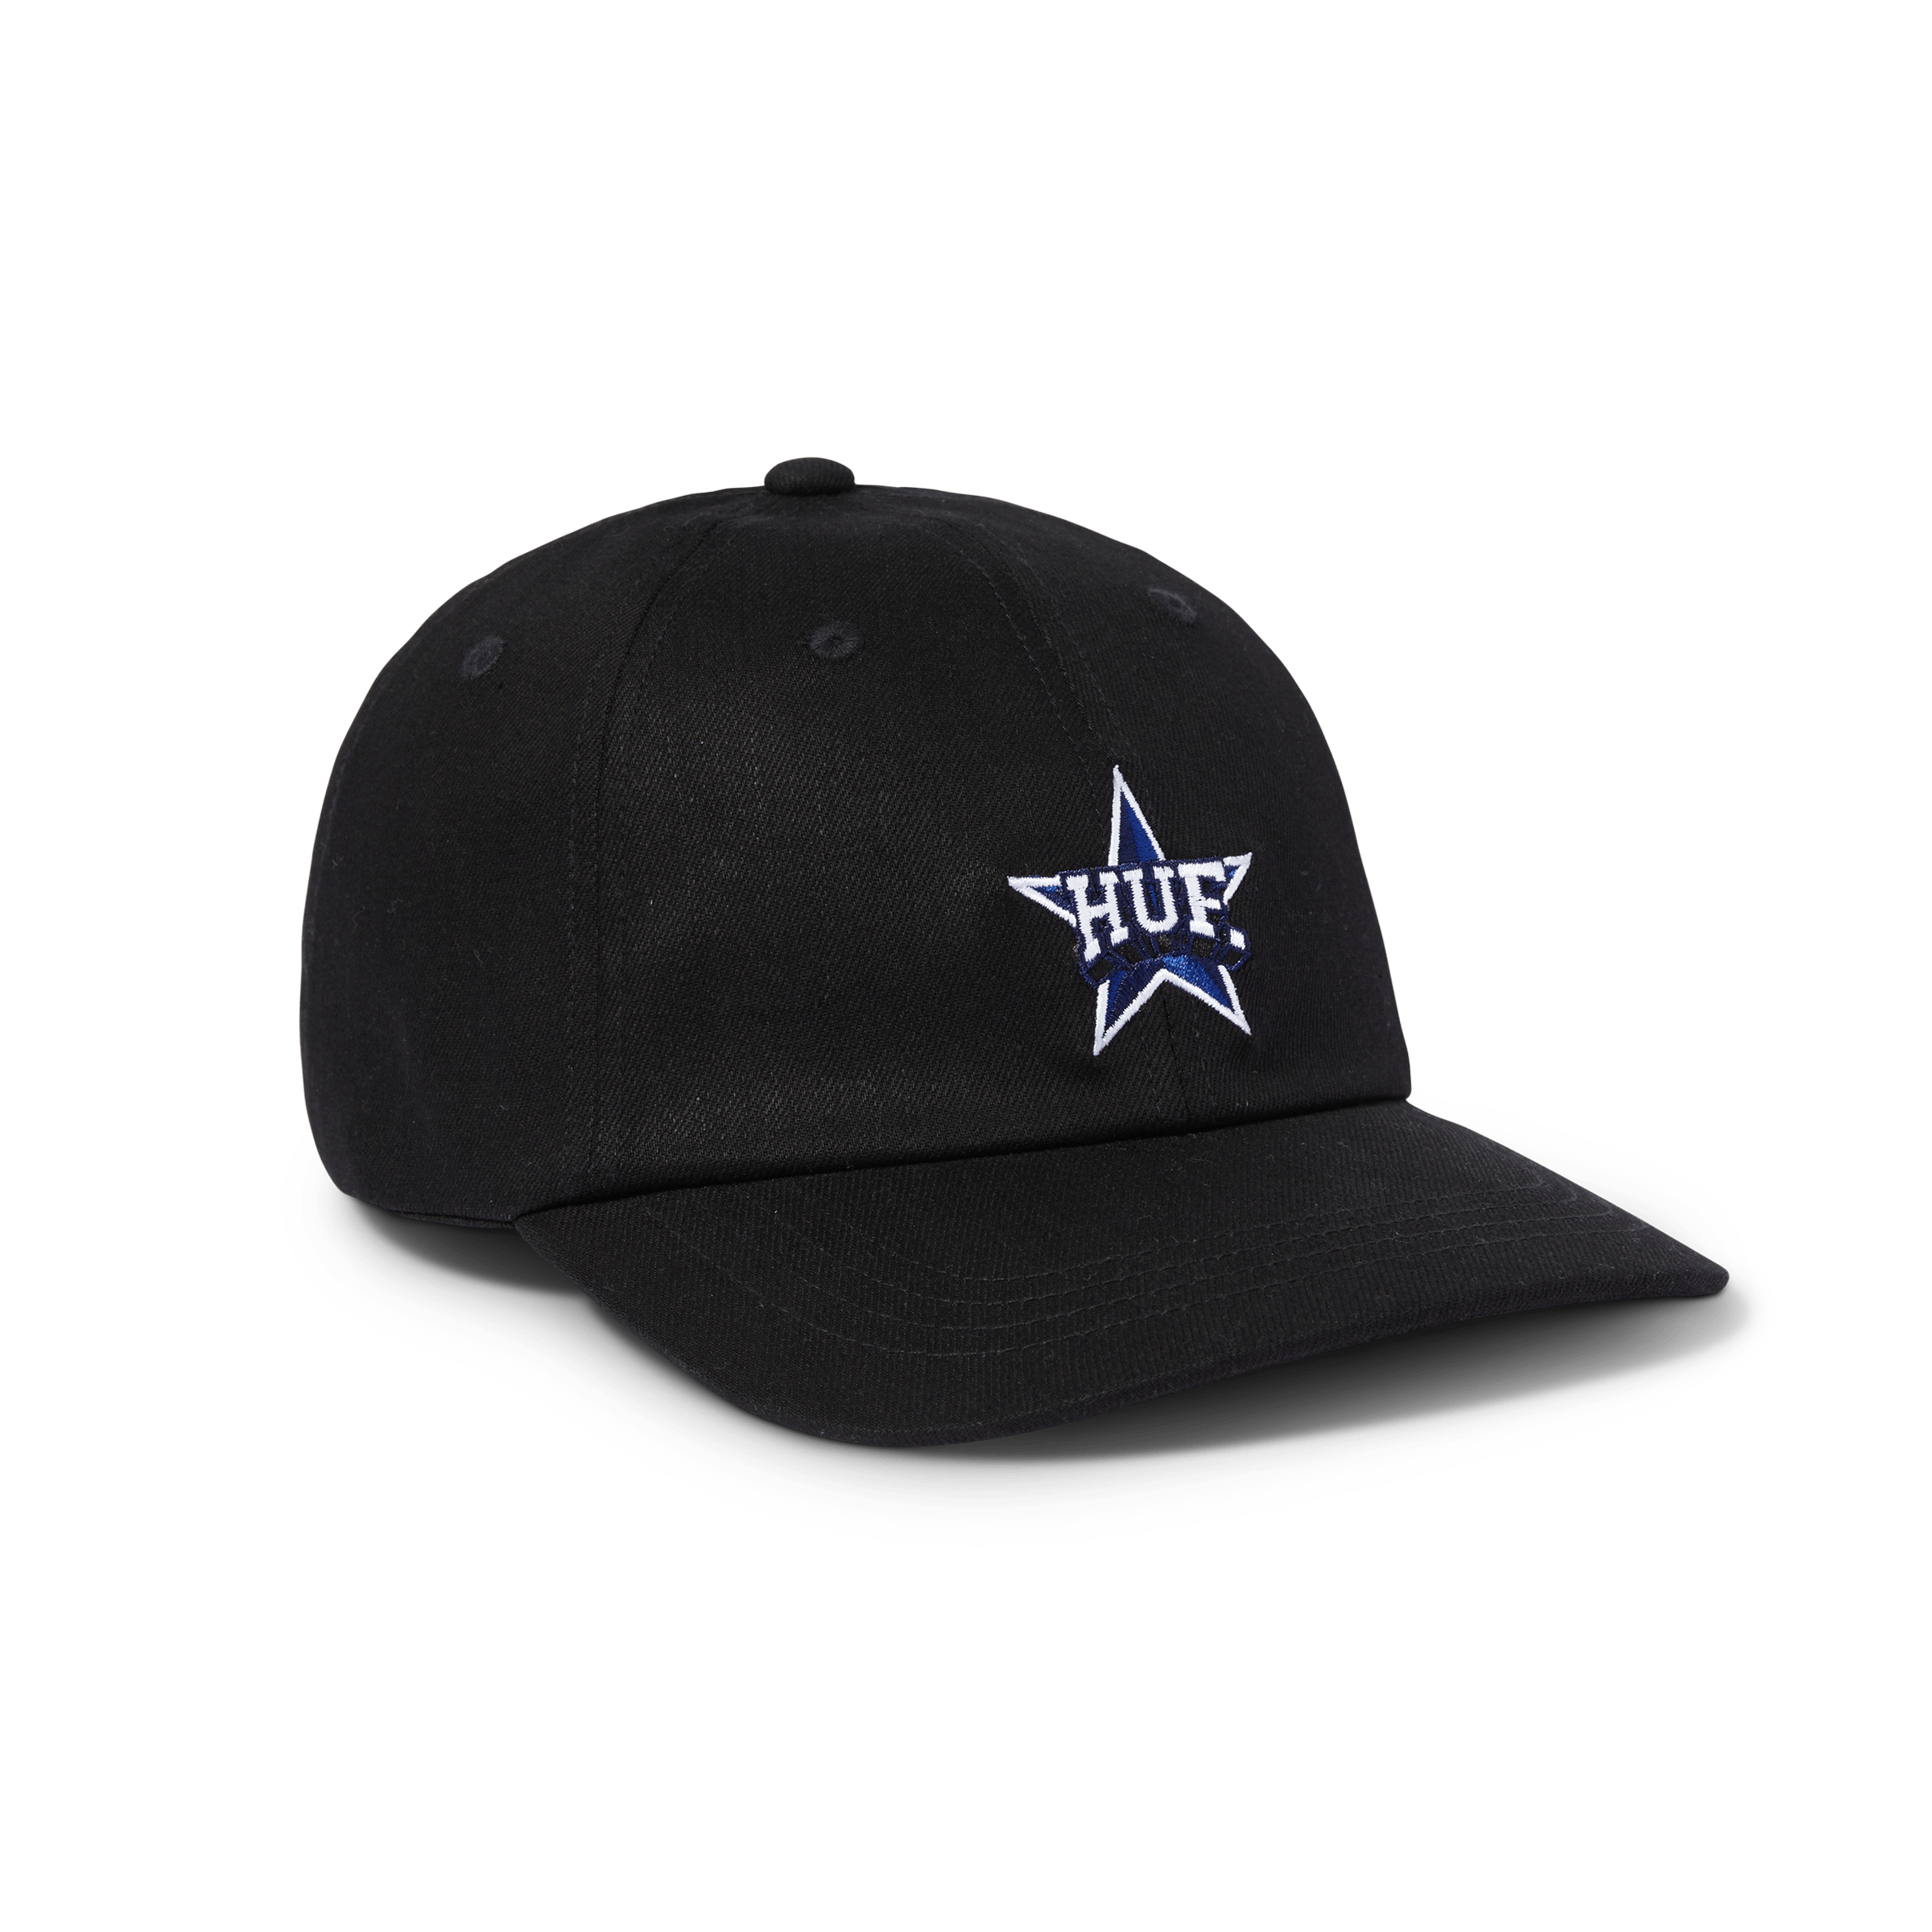 All Star 6-Panel Curved Visor Strapback Hat